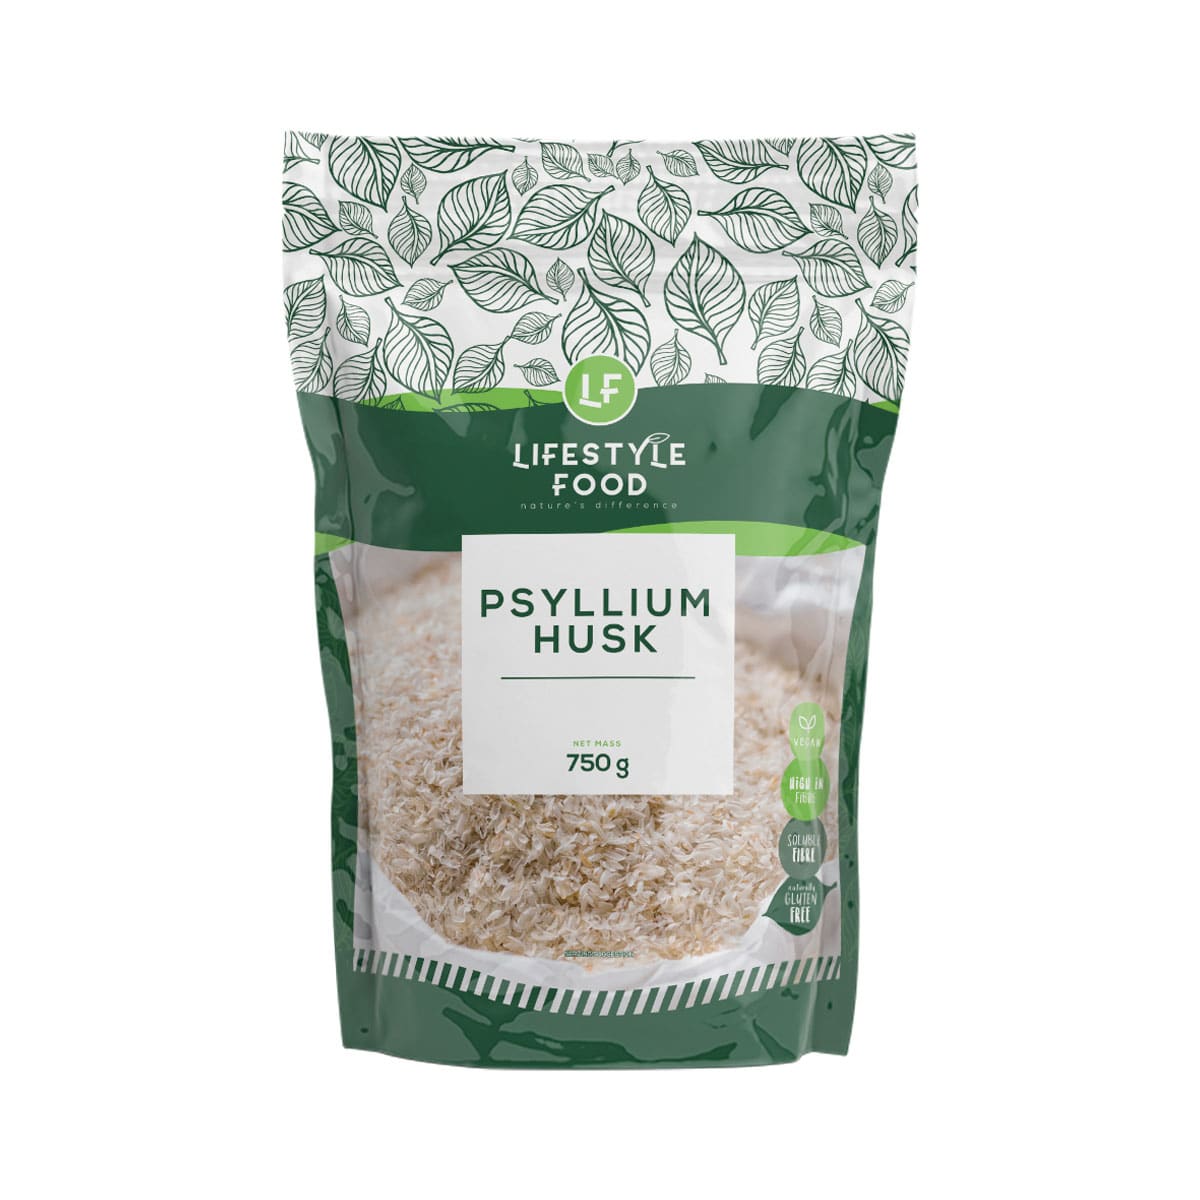 Lifestyle Food Psyllium Husk - 750g